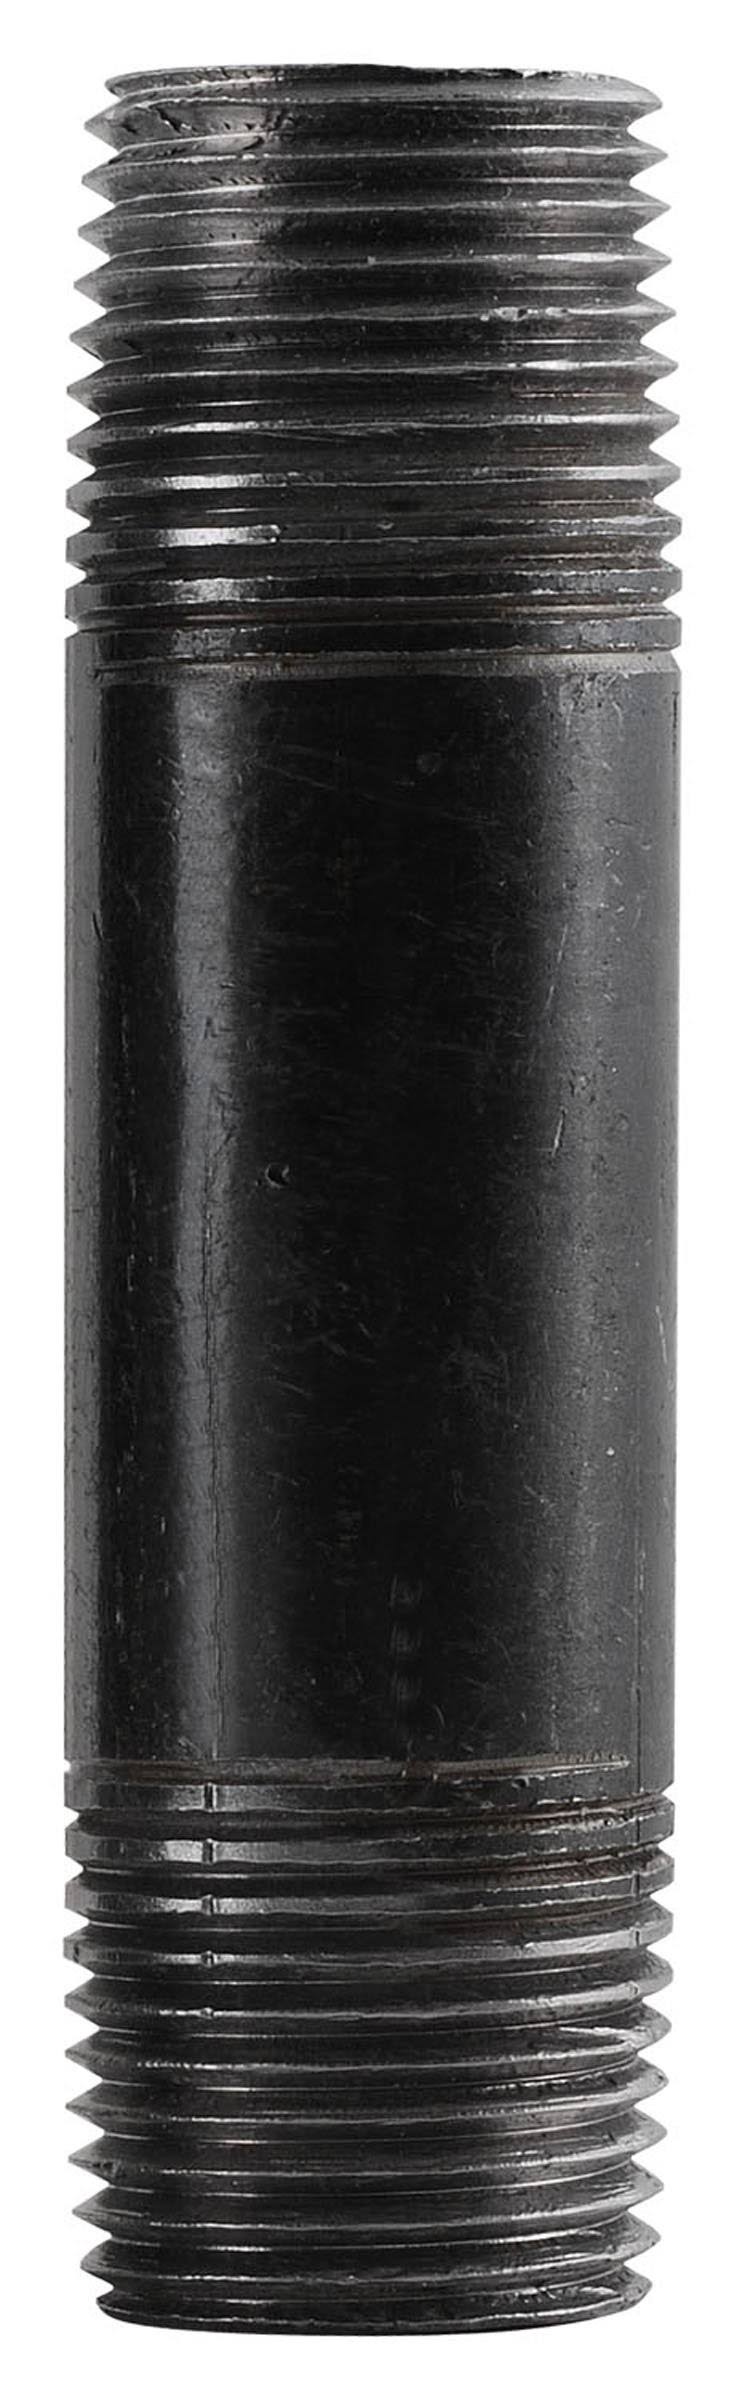 LDR 300 Pipe Nipple - Black, 3/4"x4"